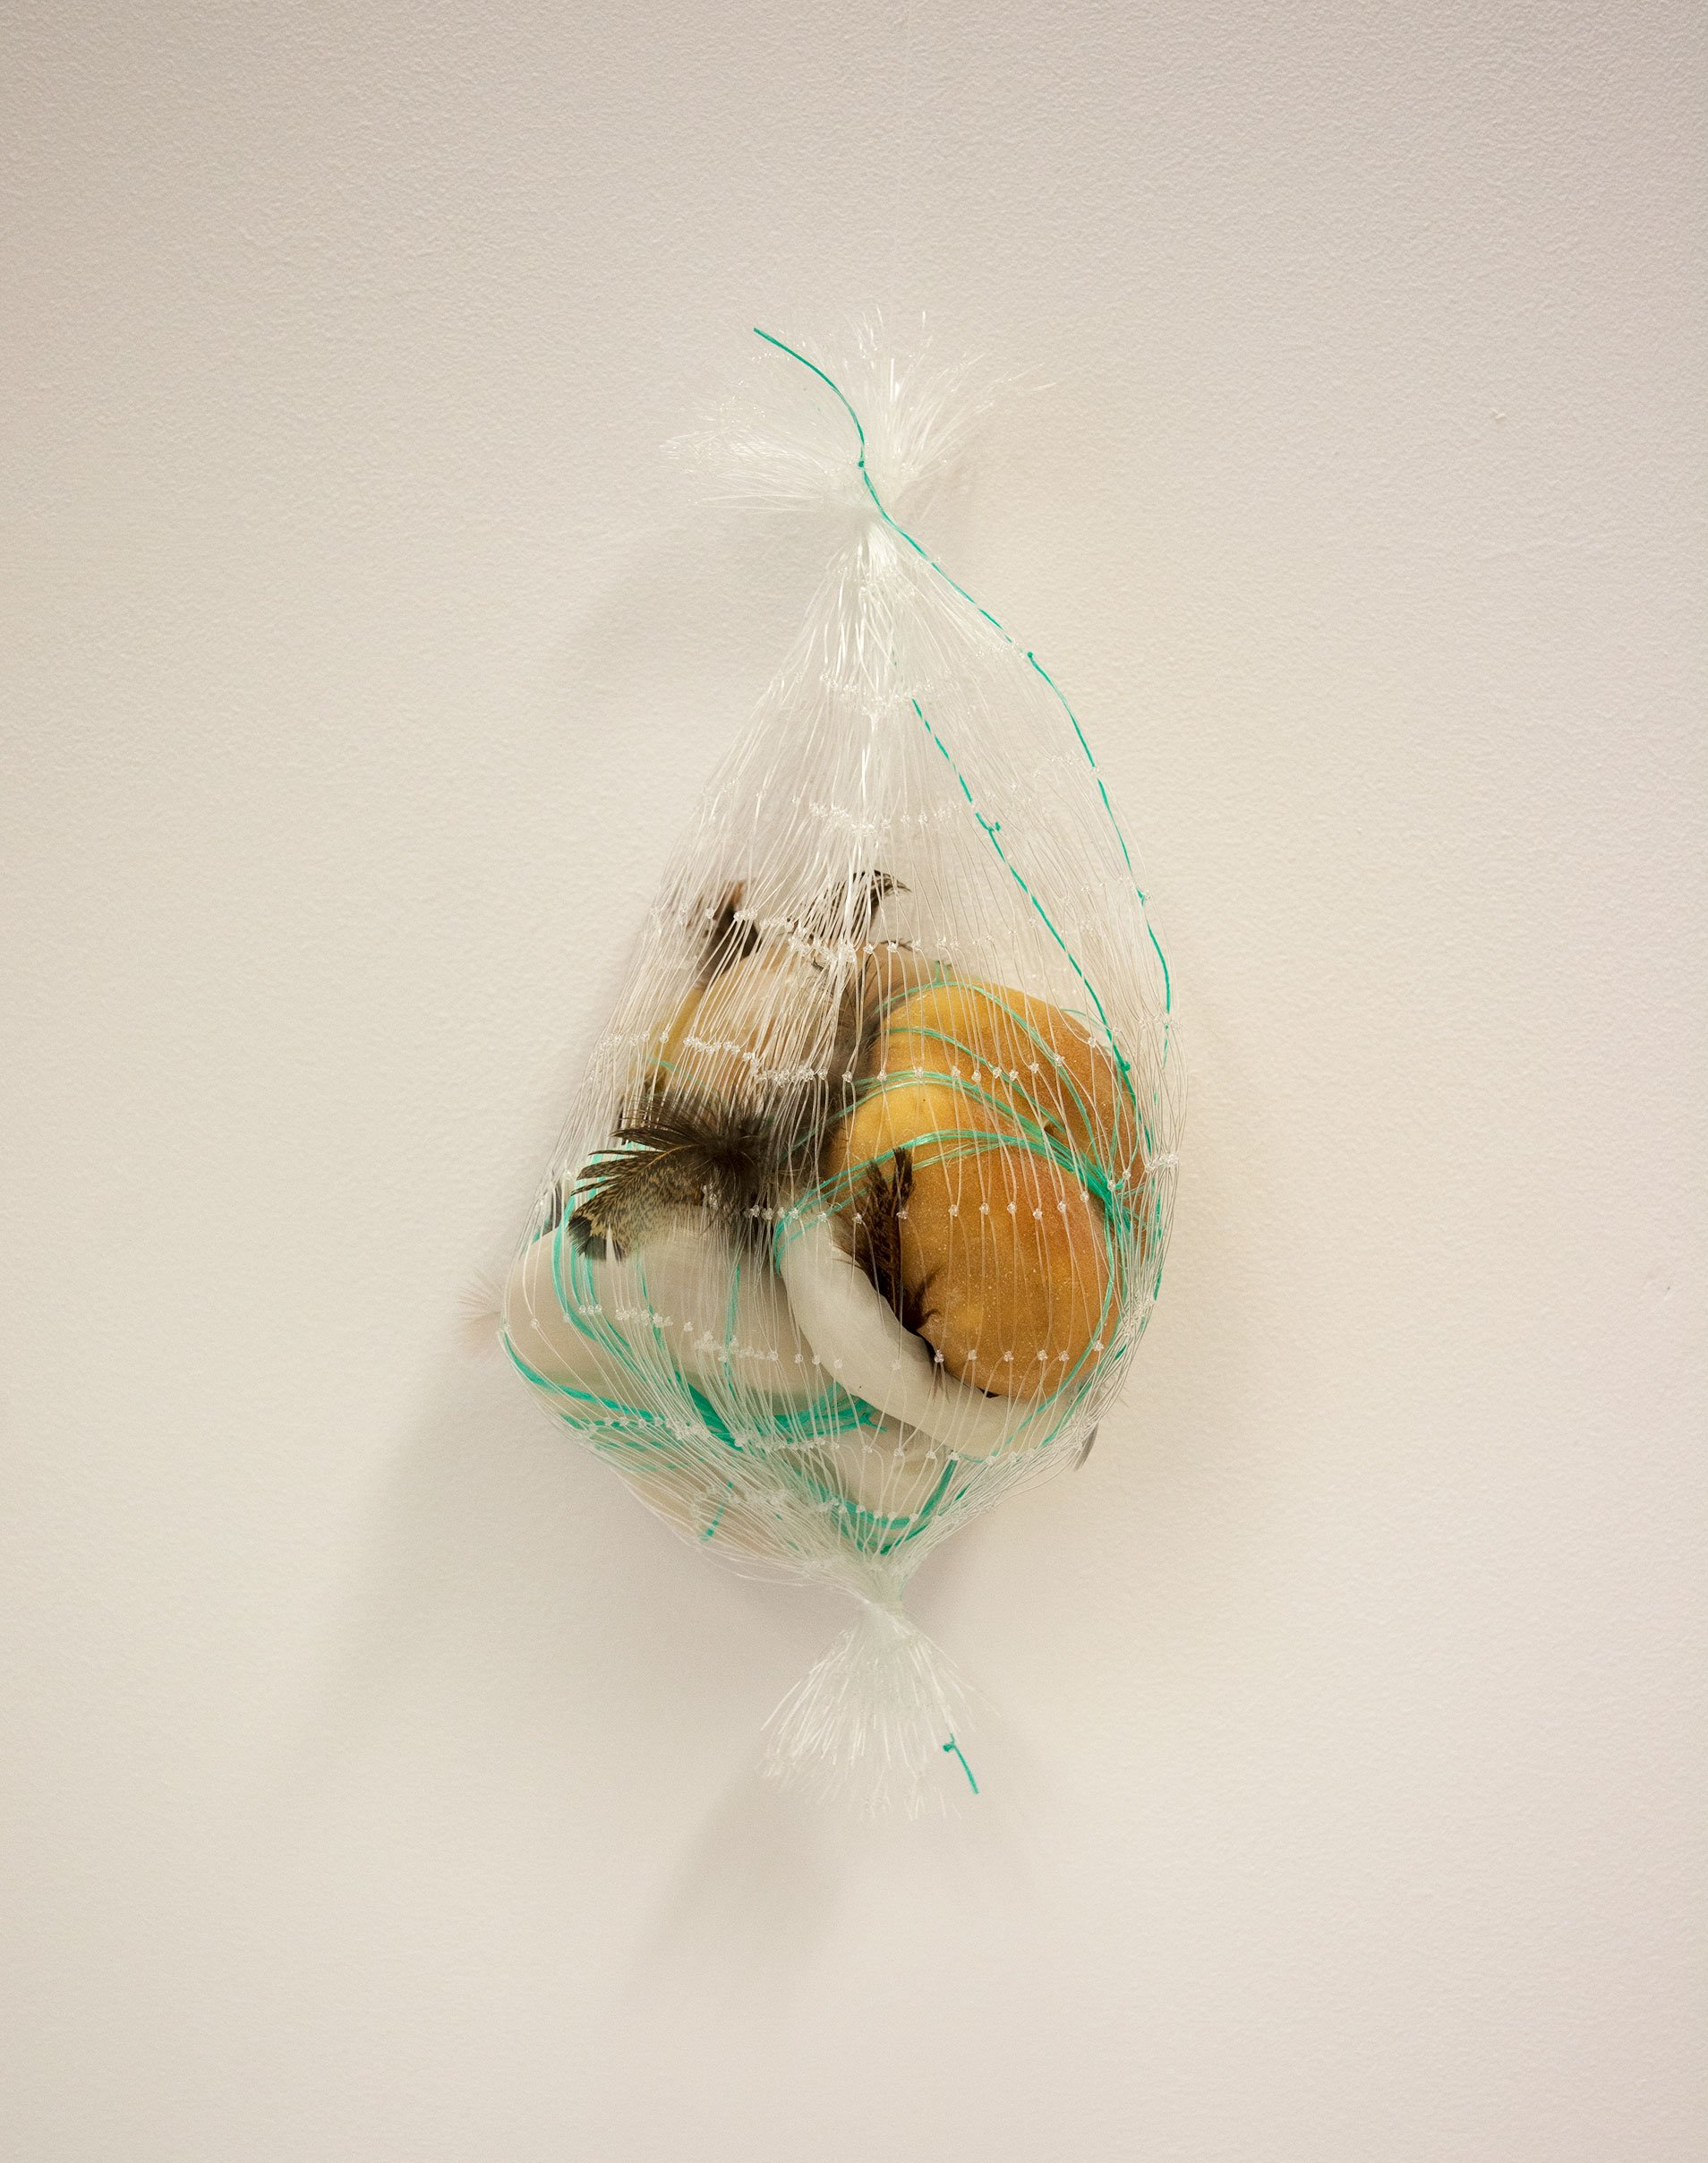  Kelly M O'Brien, One Meter Quadrat, suspended 4. Wax, latex, wool, feathers, bailing twine, bird net ©2021 